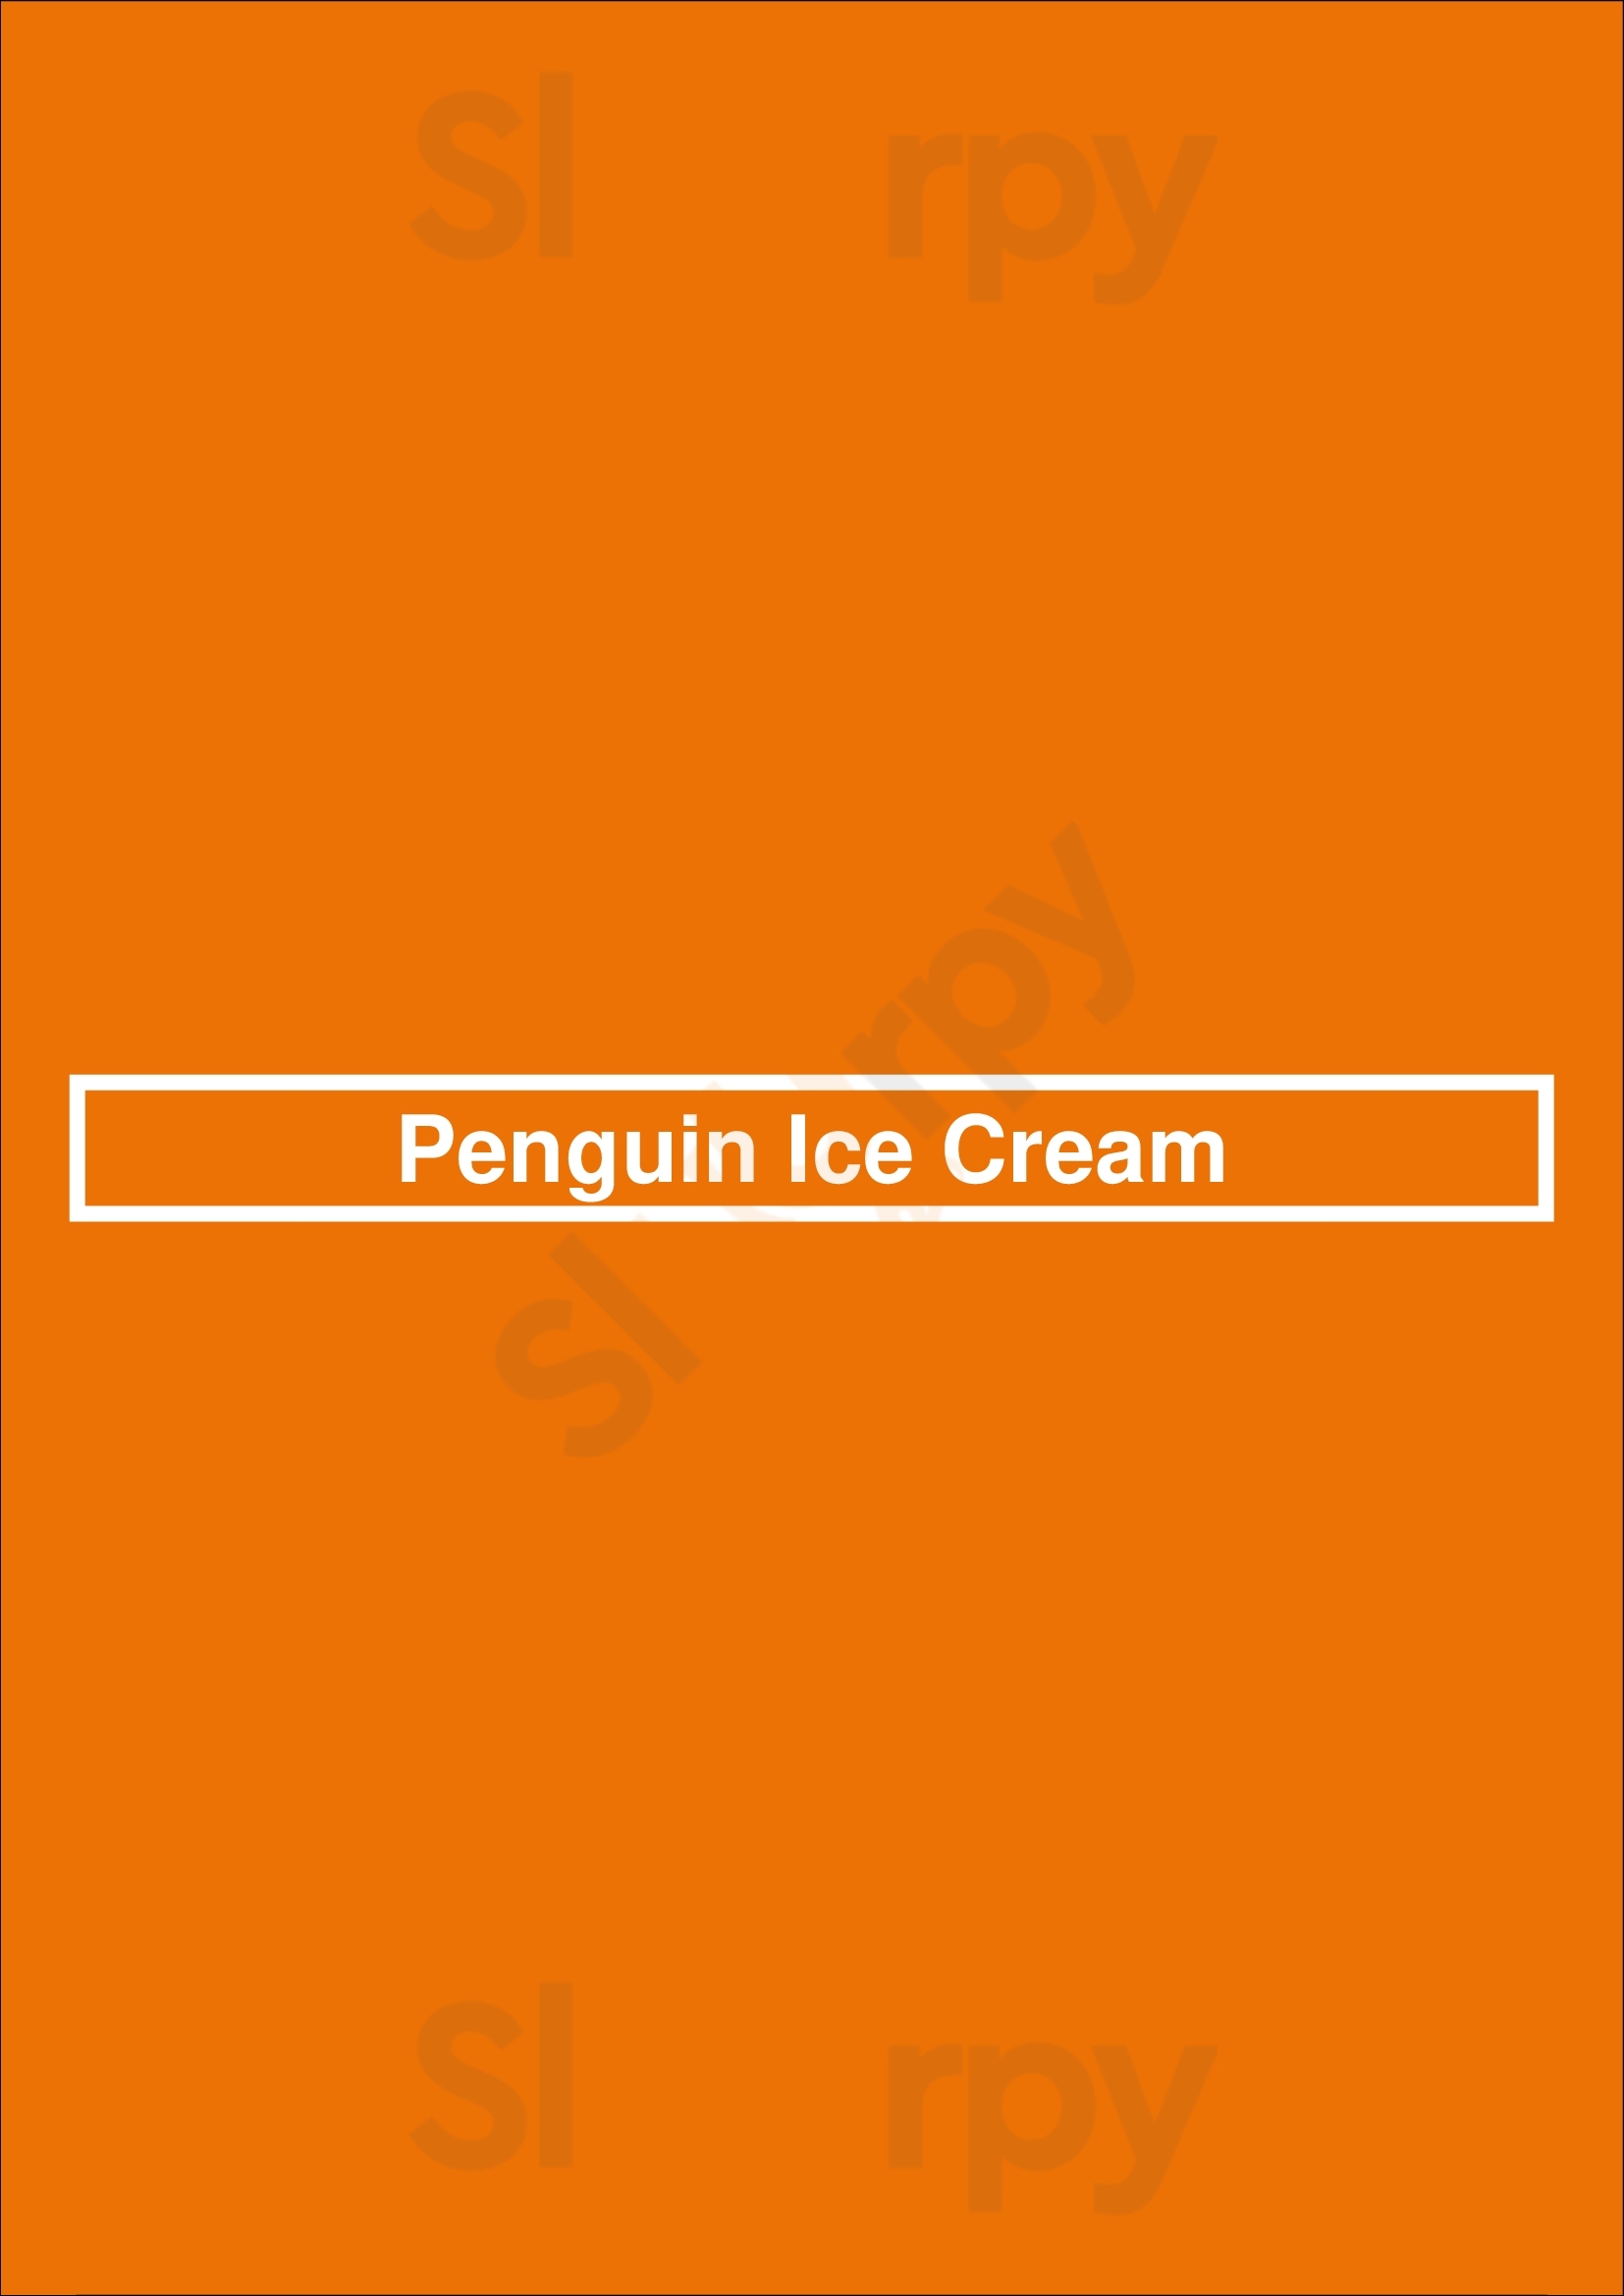 Penguin Ice Cream New York City Menu - 1